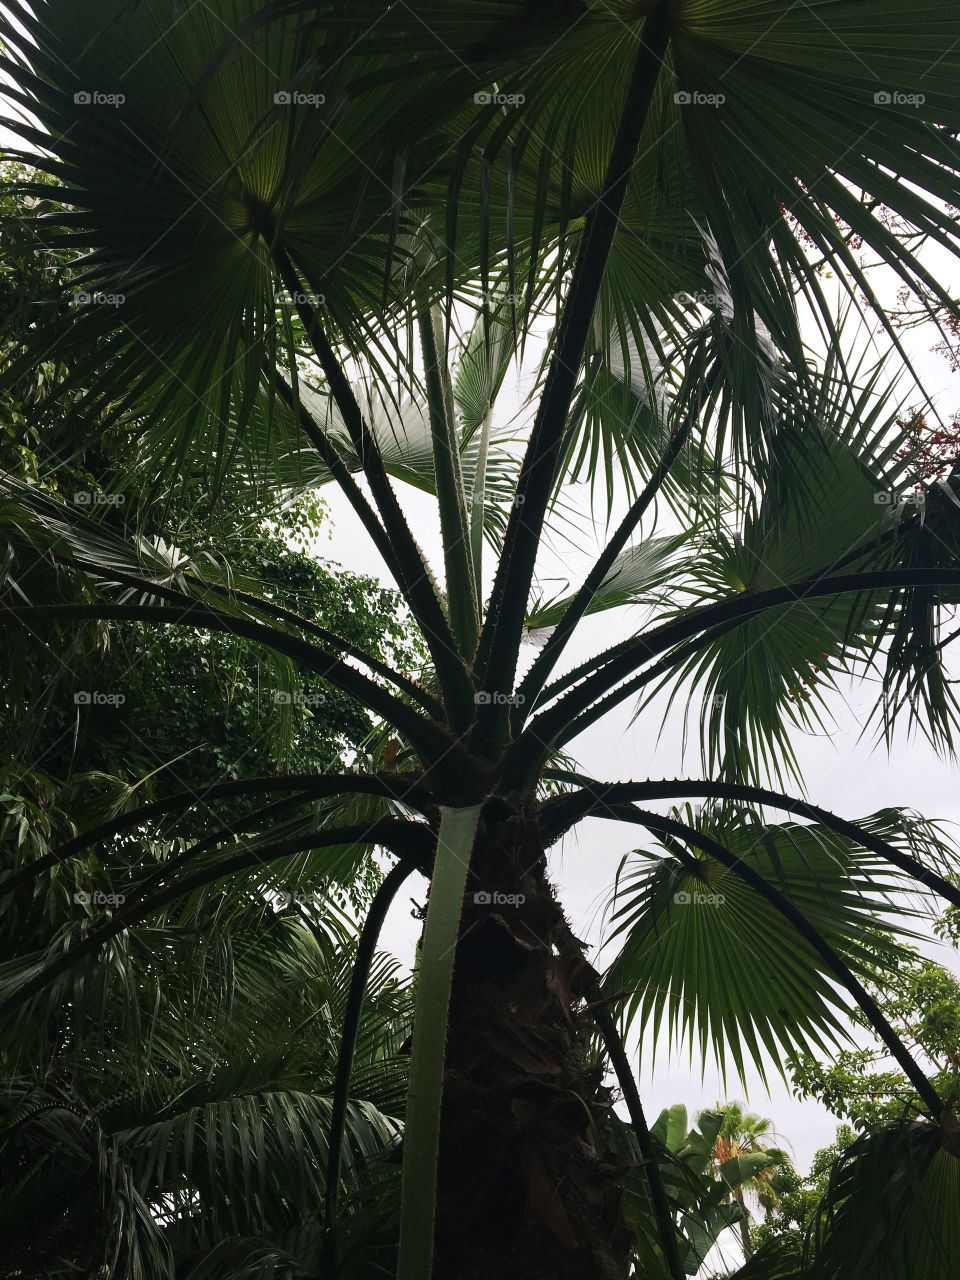 Underneath the palmtrees 